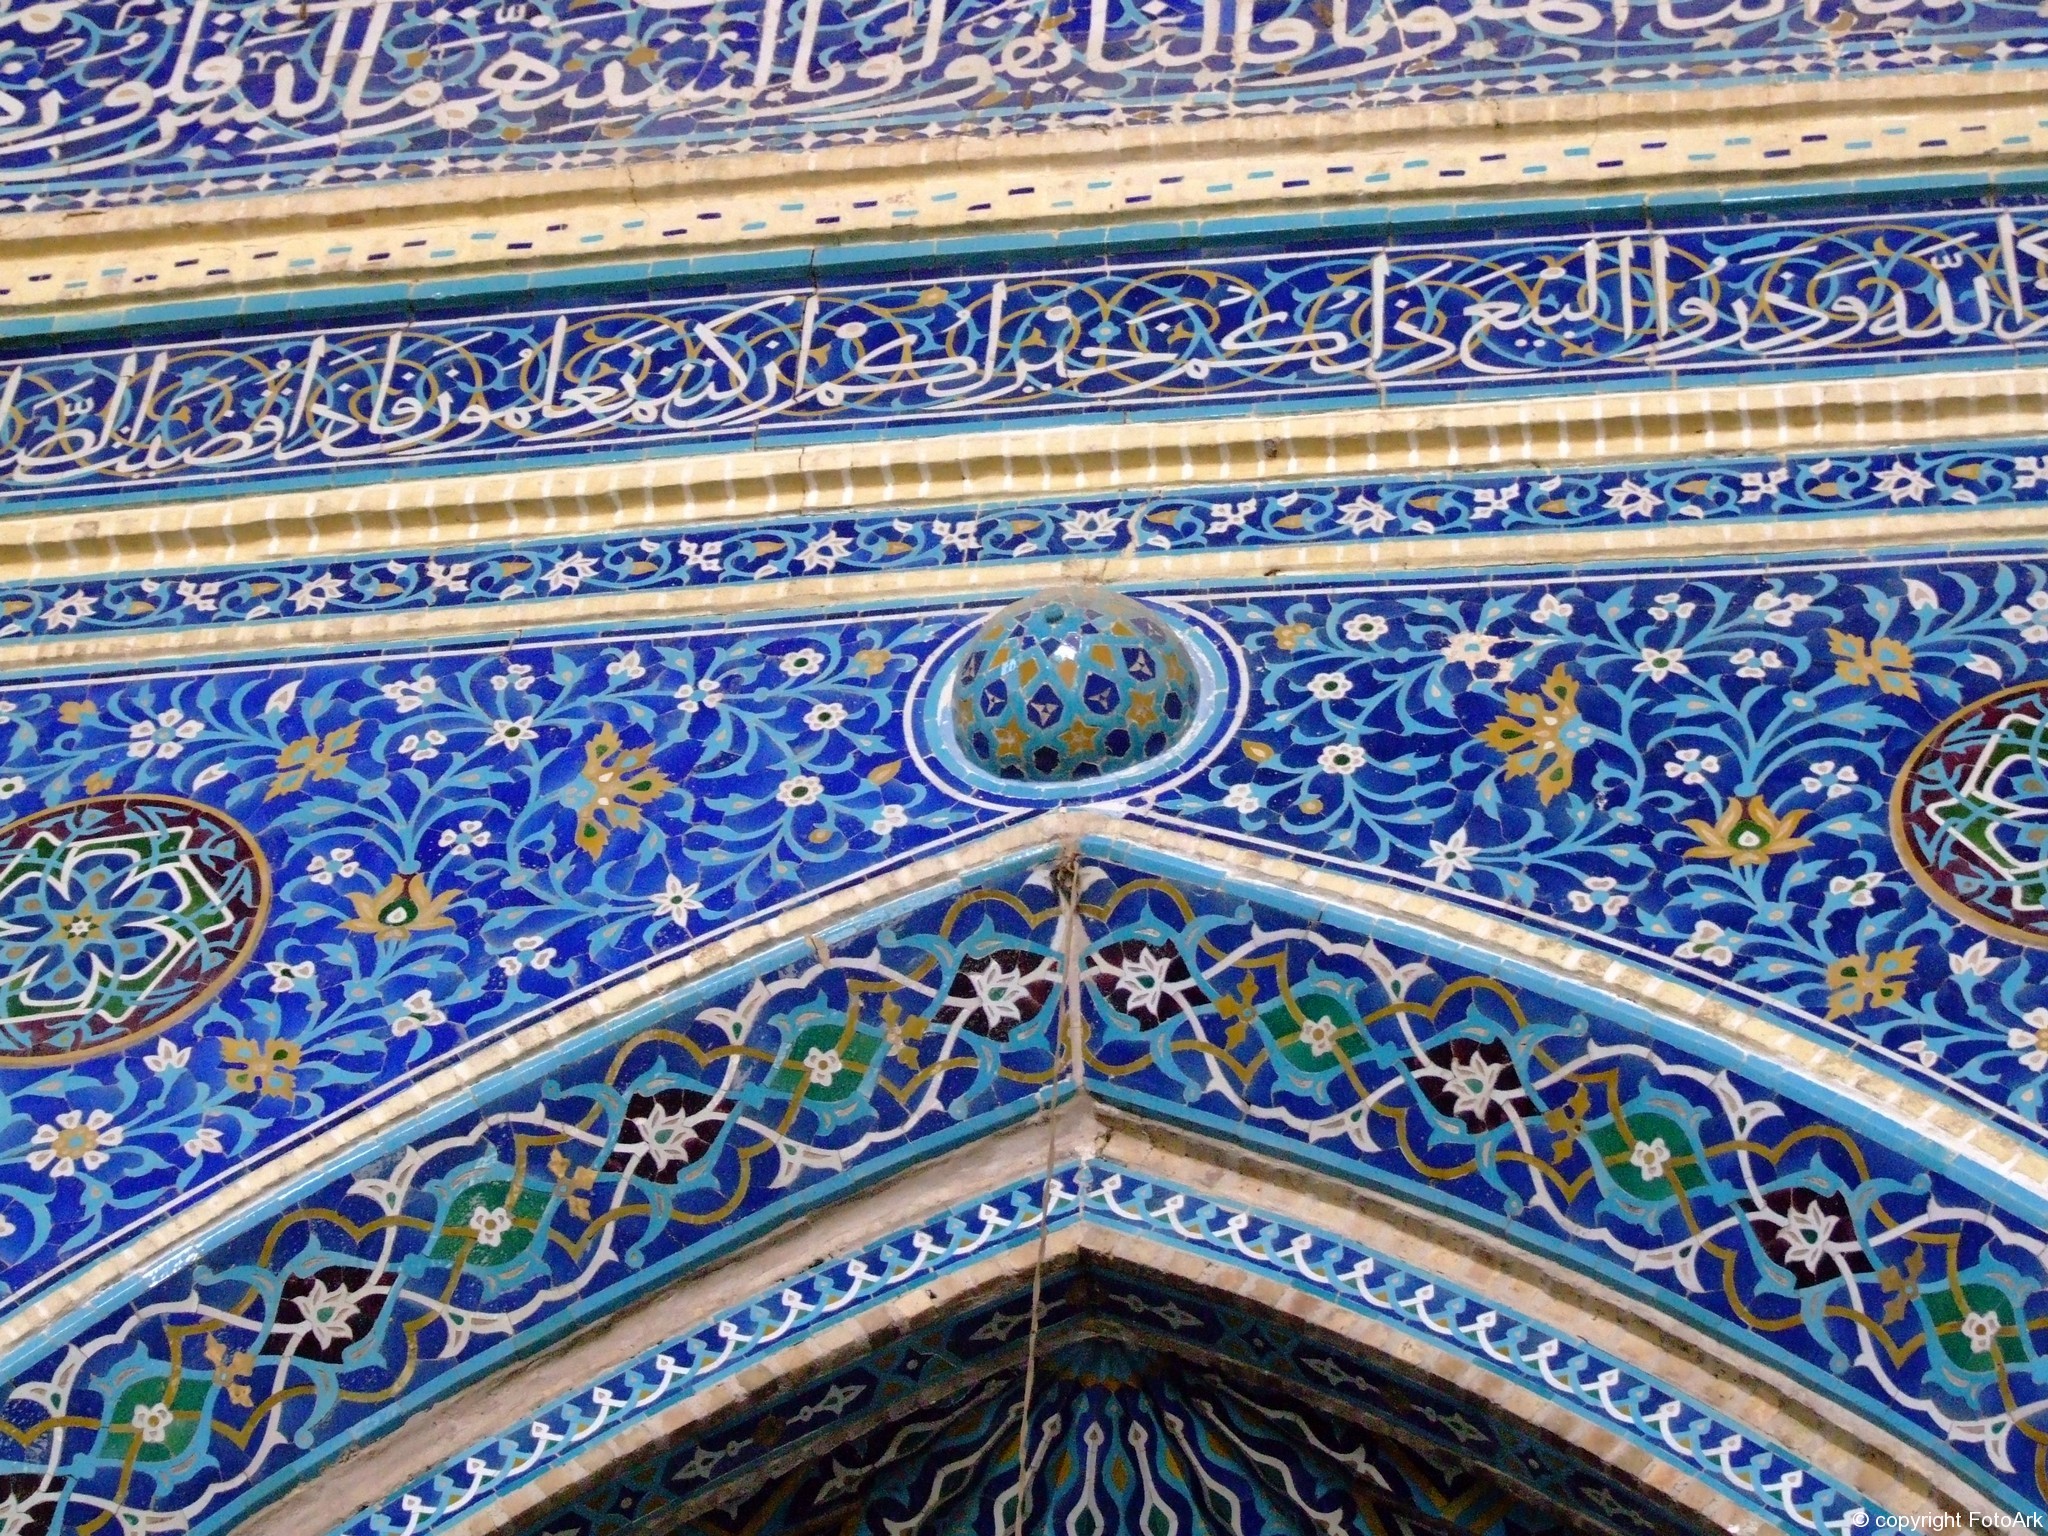 Colorful Iranian Tiles